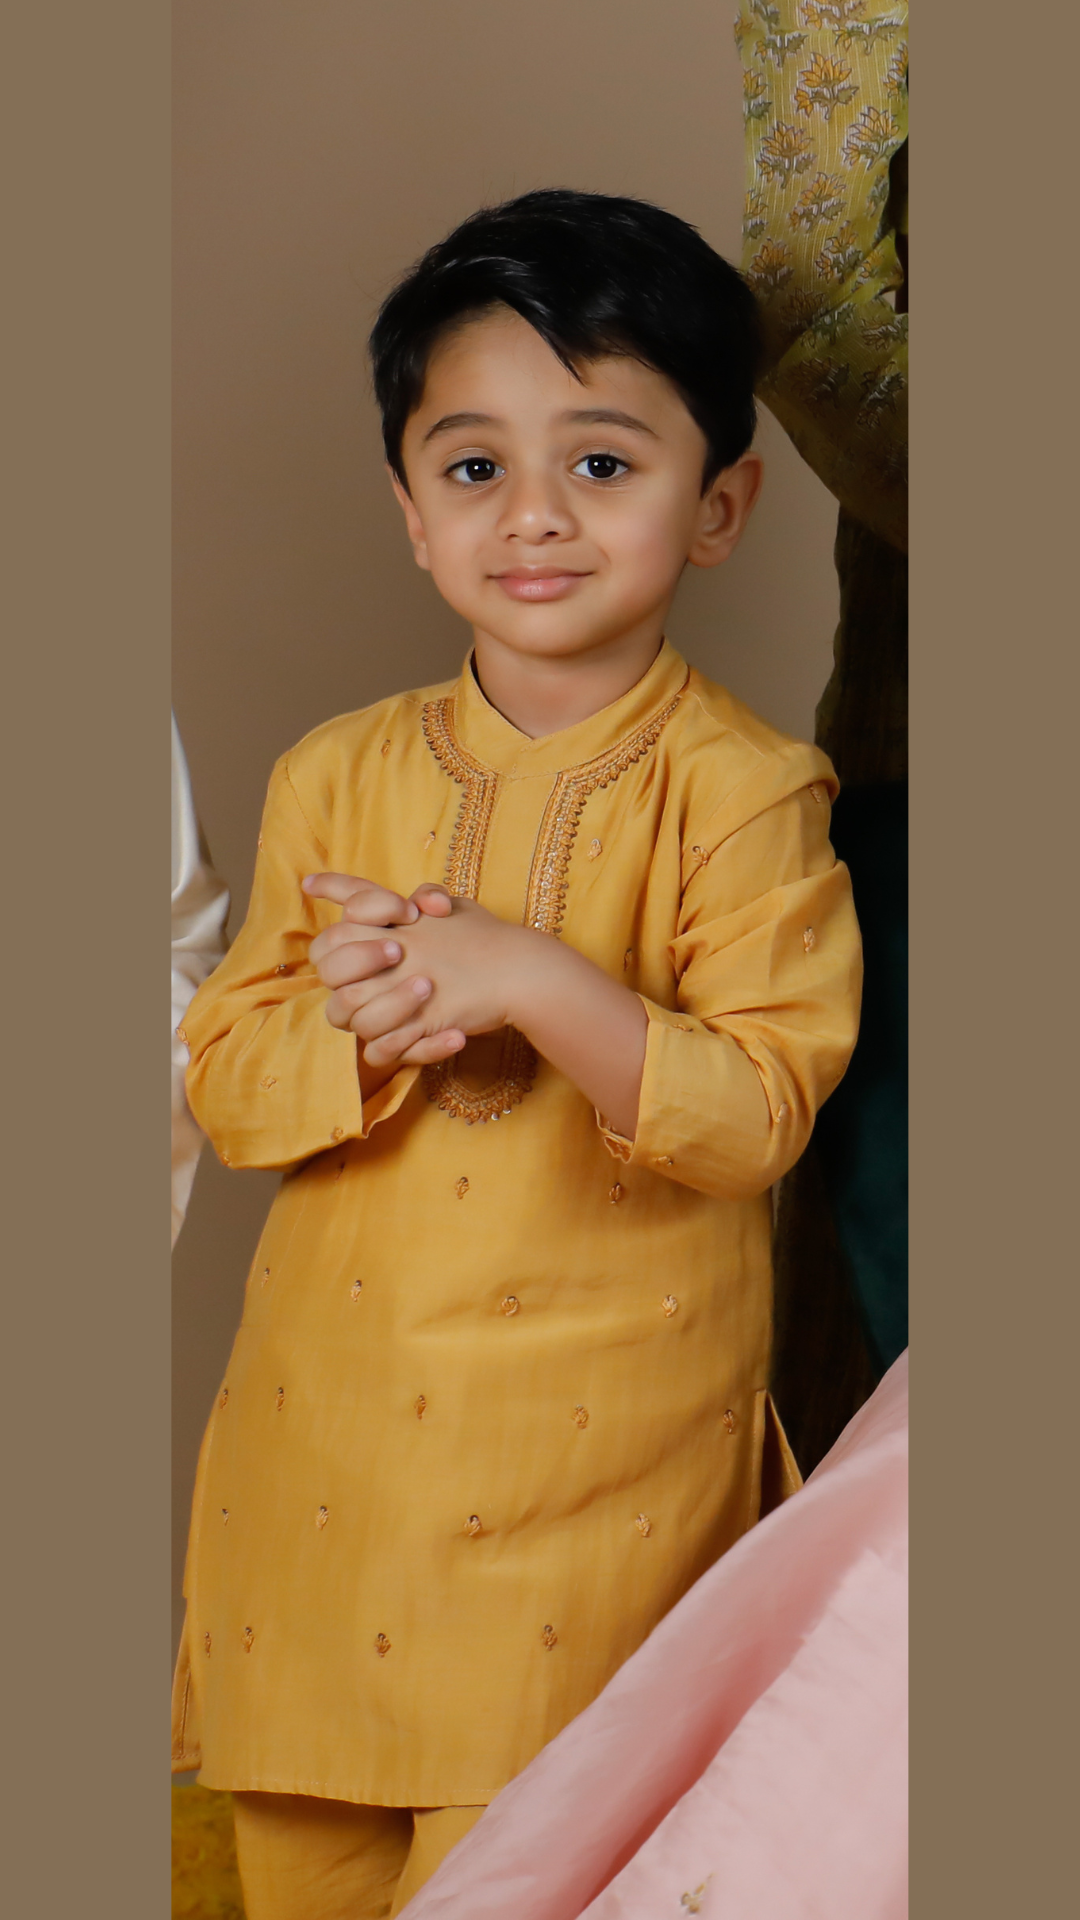  Indian ethnic wear  Kids Indian clothing |wedding party girls dresses| Lehenga crop top sets kurta sets for Boys| Designer kids boutique |Flowergirl dress   Blog Posts 